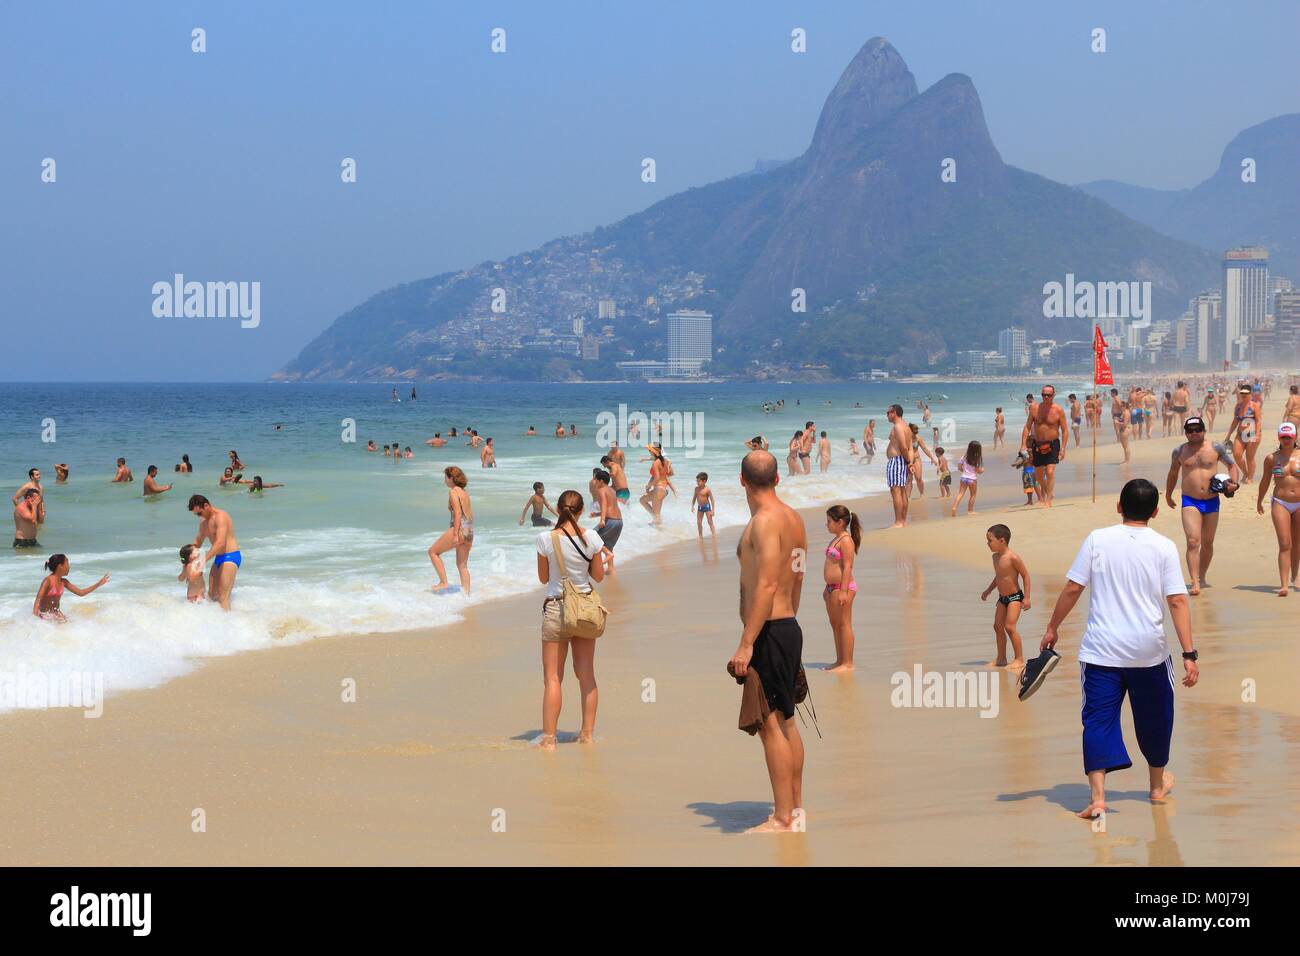 RIO DE JANEIRO, BRAZIL - OCTOBER 19, 2014: People visit Ipanema beach in Rio de Janeiro. In 2013 1.6 million international tourists visited Rio. Stock Photo